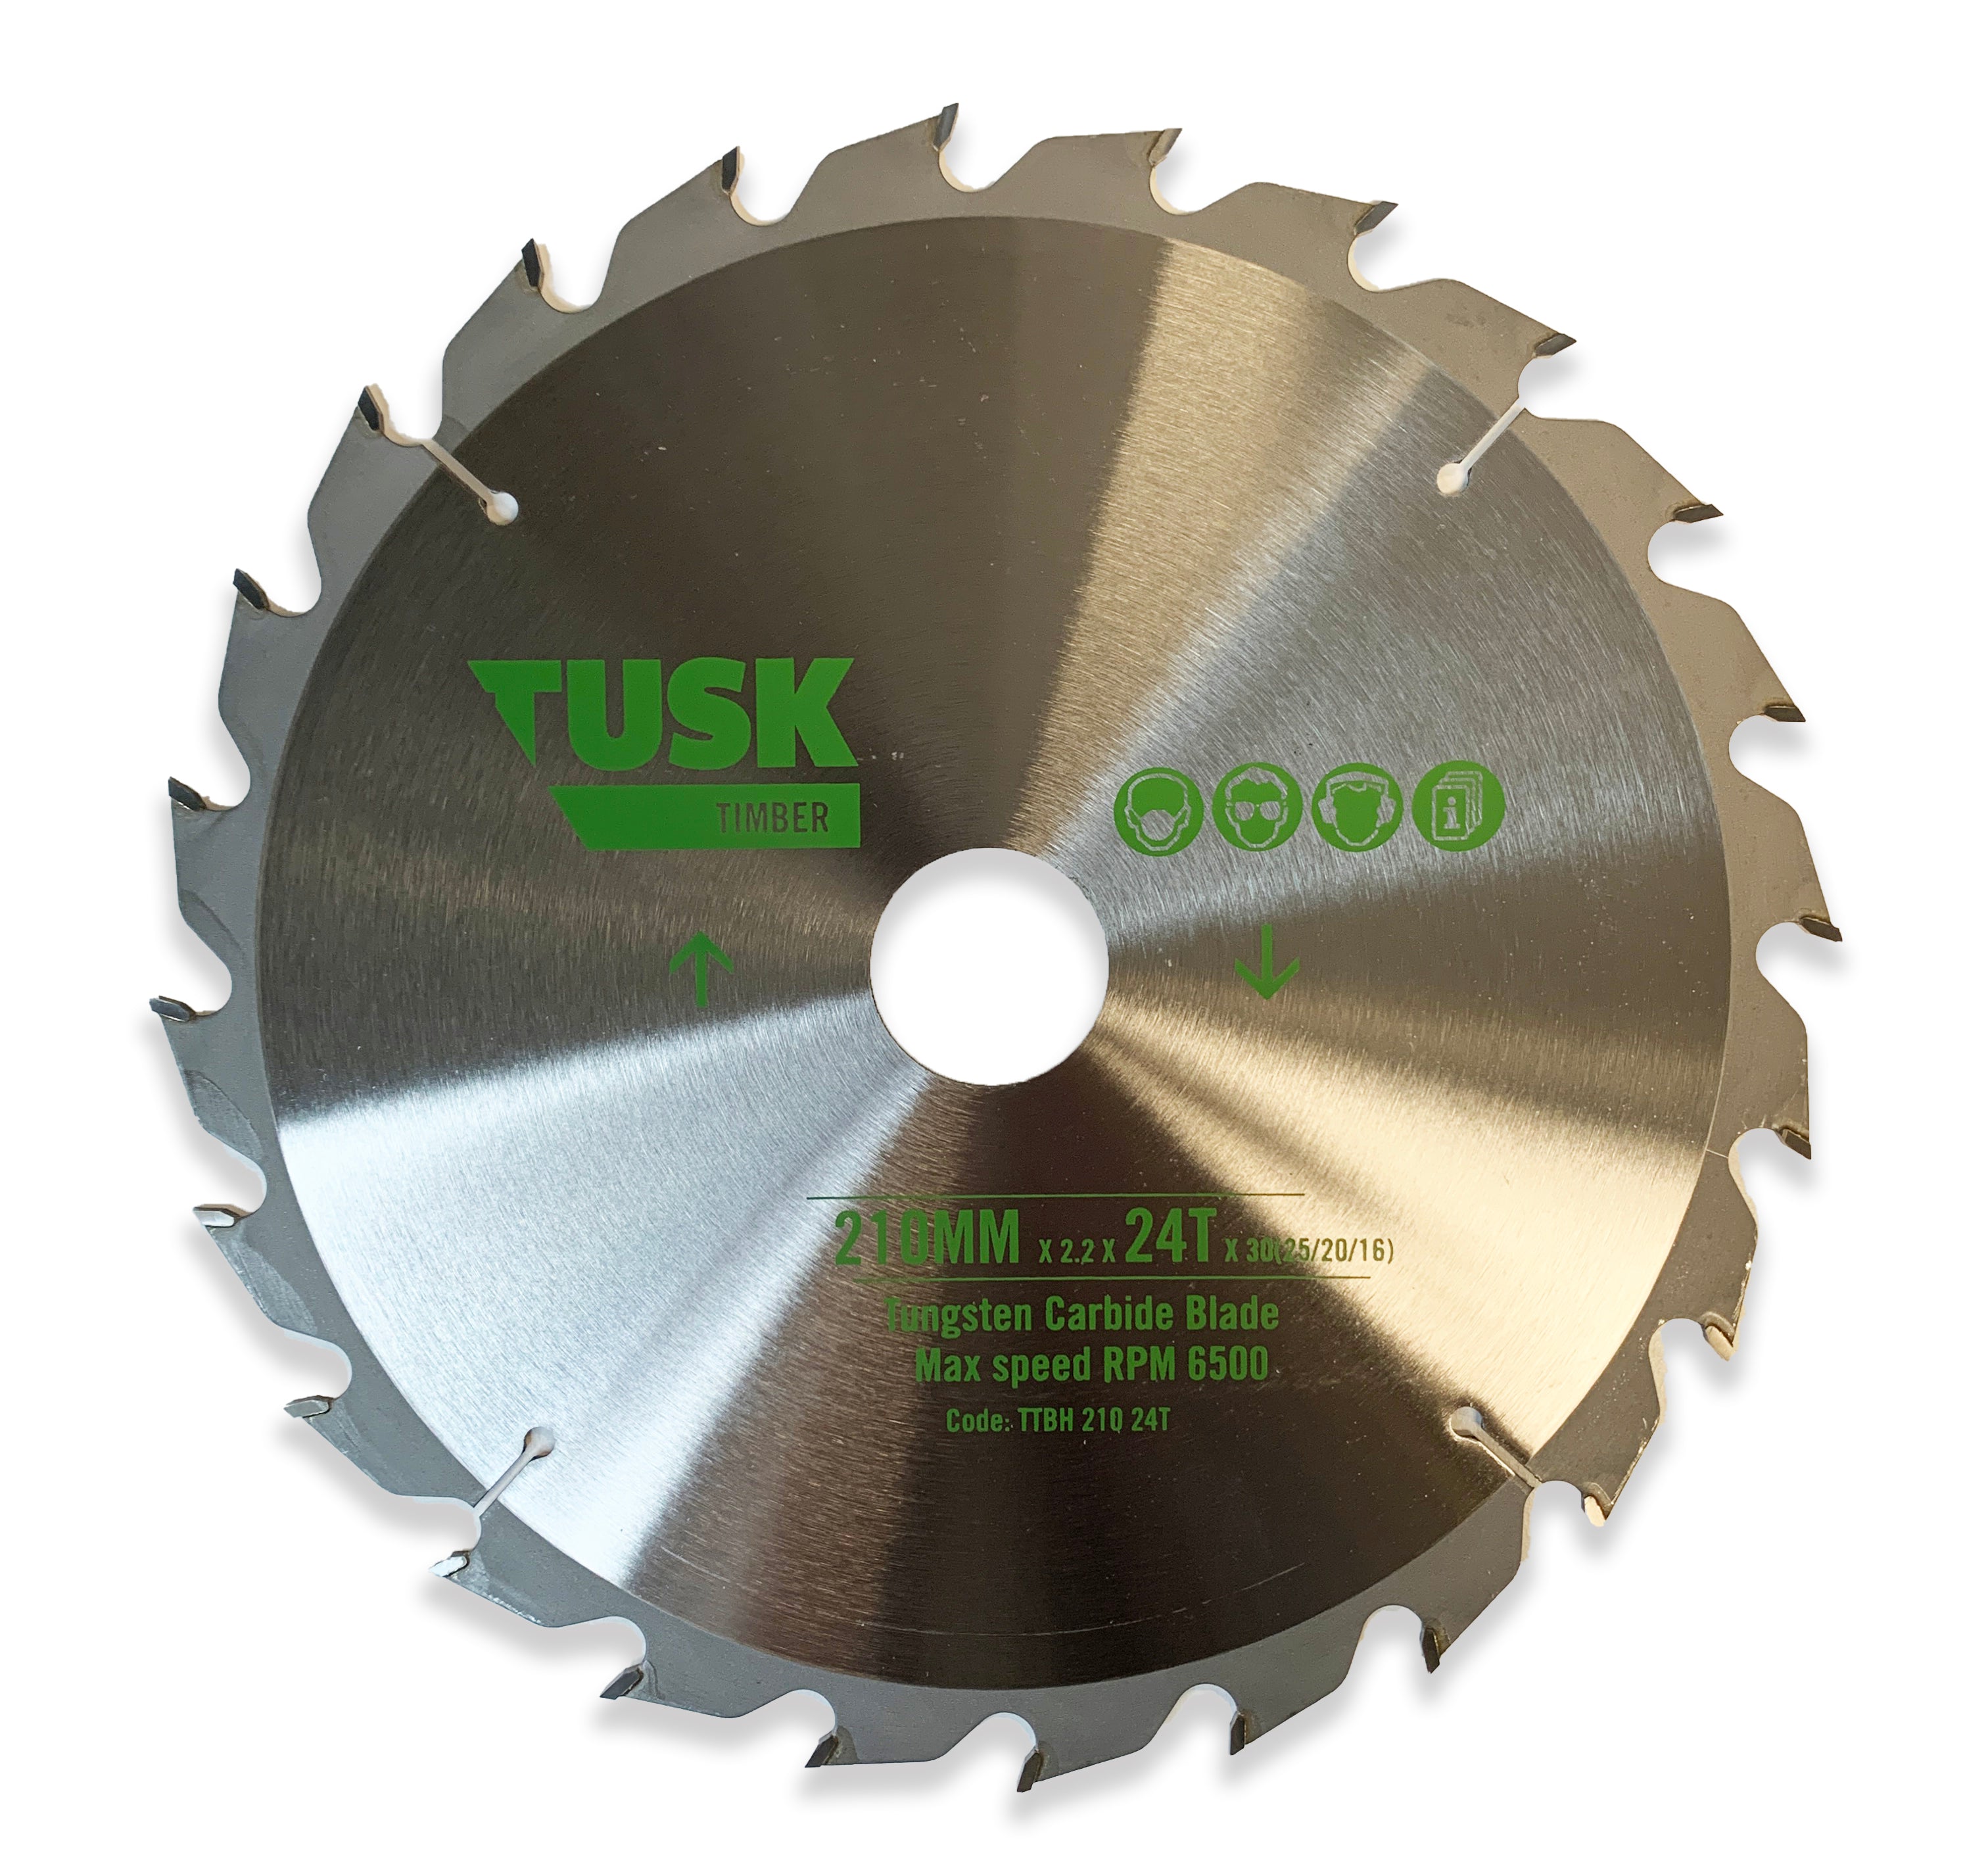 Tusk Timber Tungsten Carbide Blades - 185 X 2.0/1.2 X 20T X 20 (20/16)